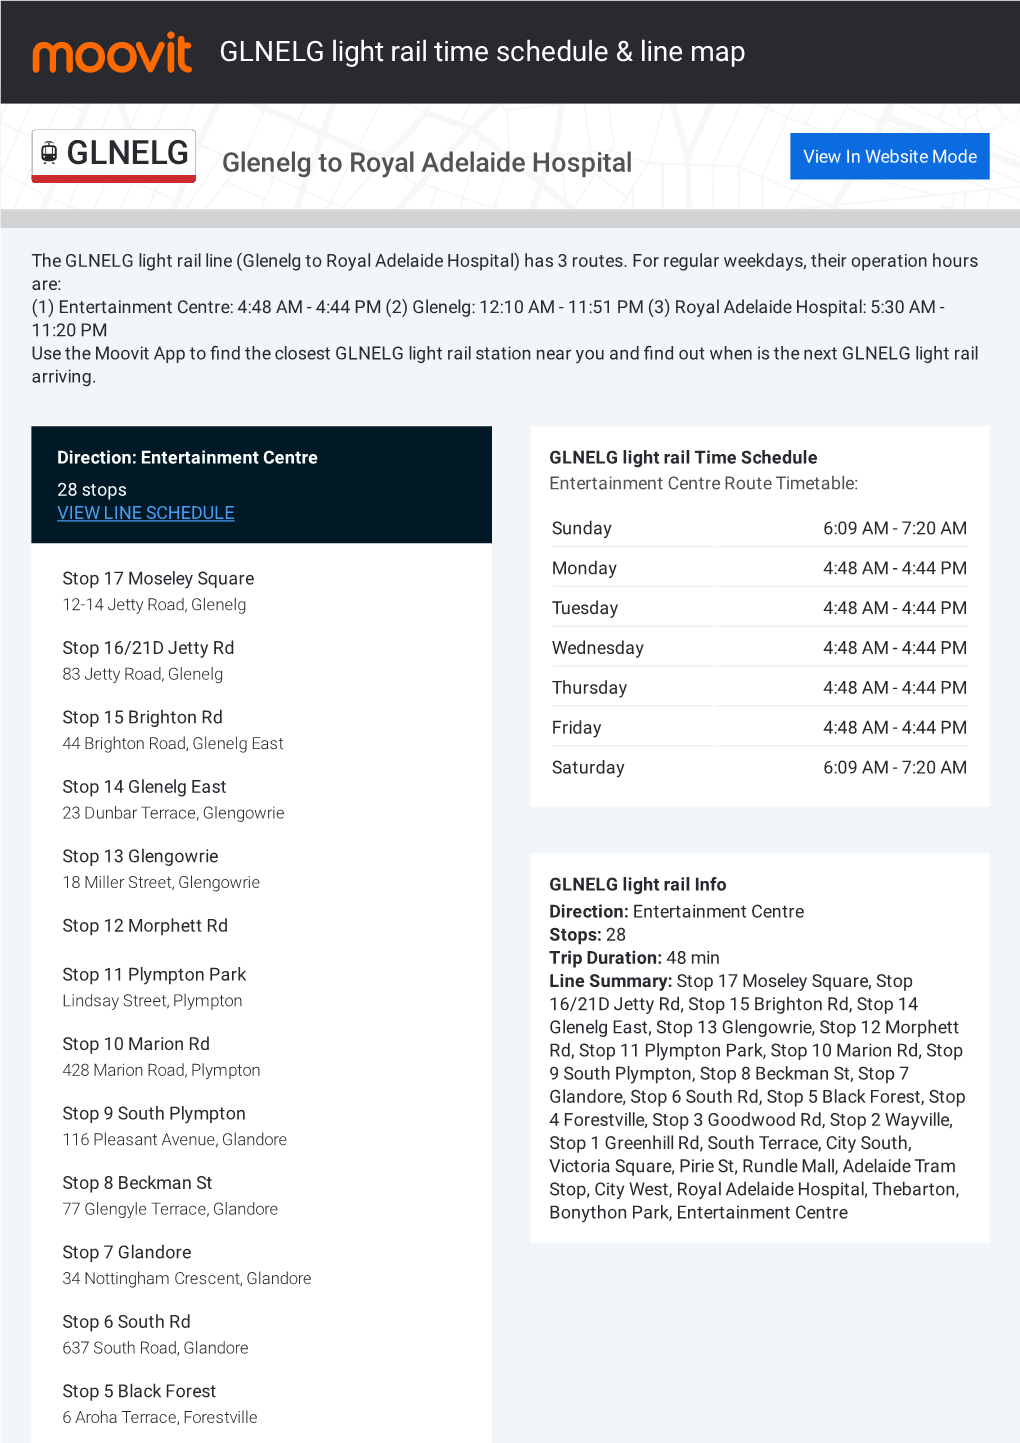 GLNELG Light Rail Time Schedule & Line Route